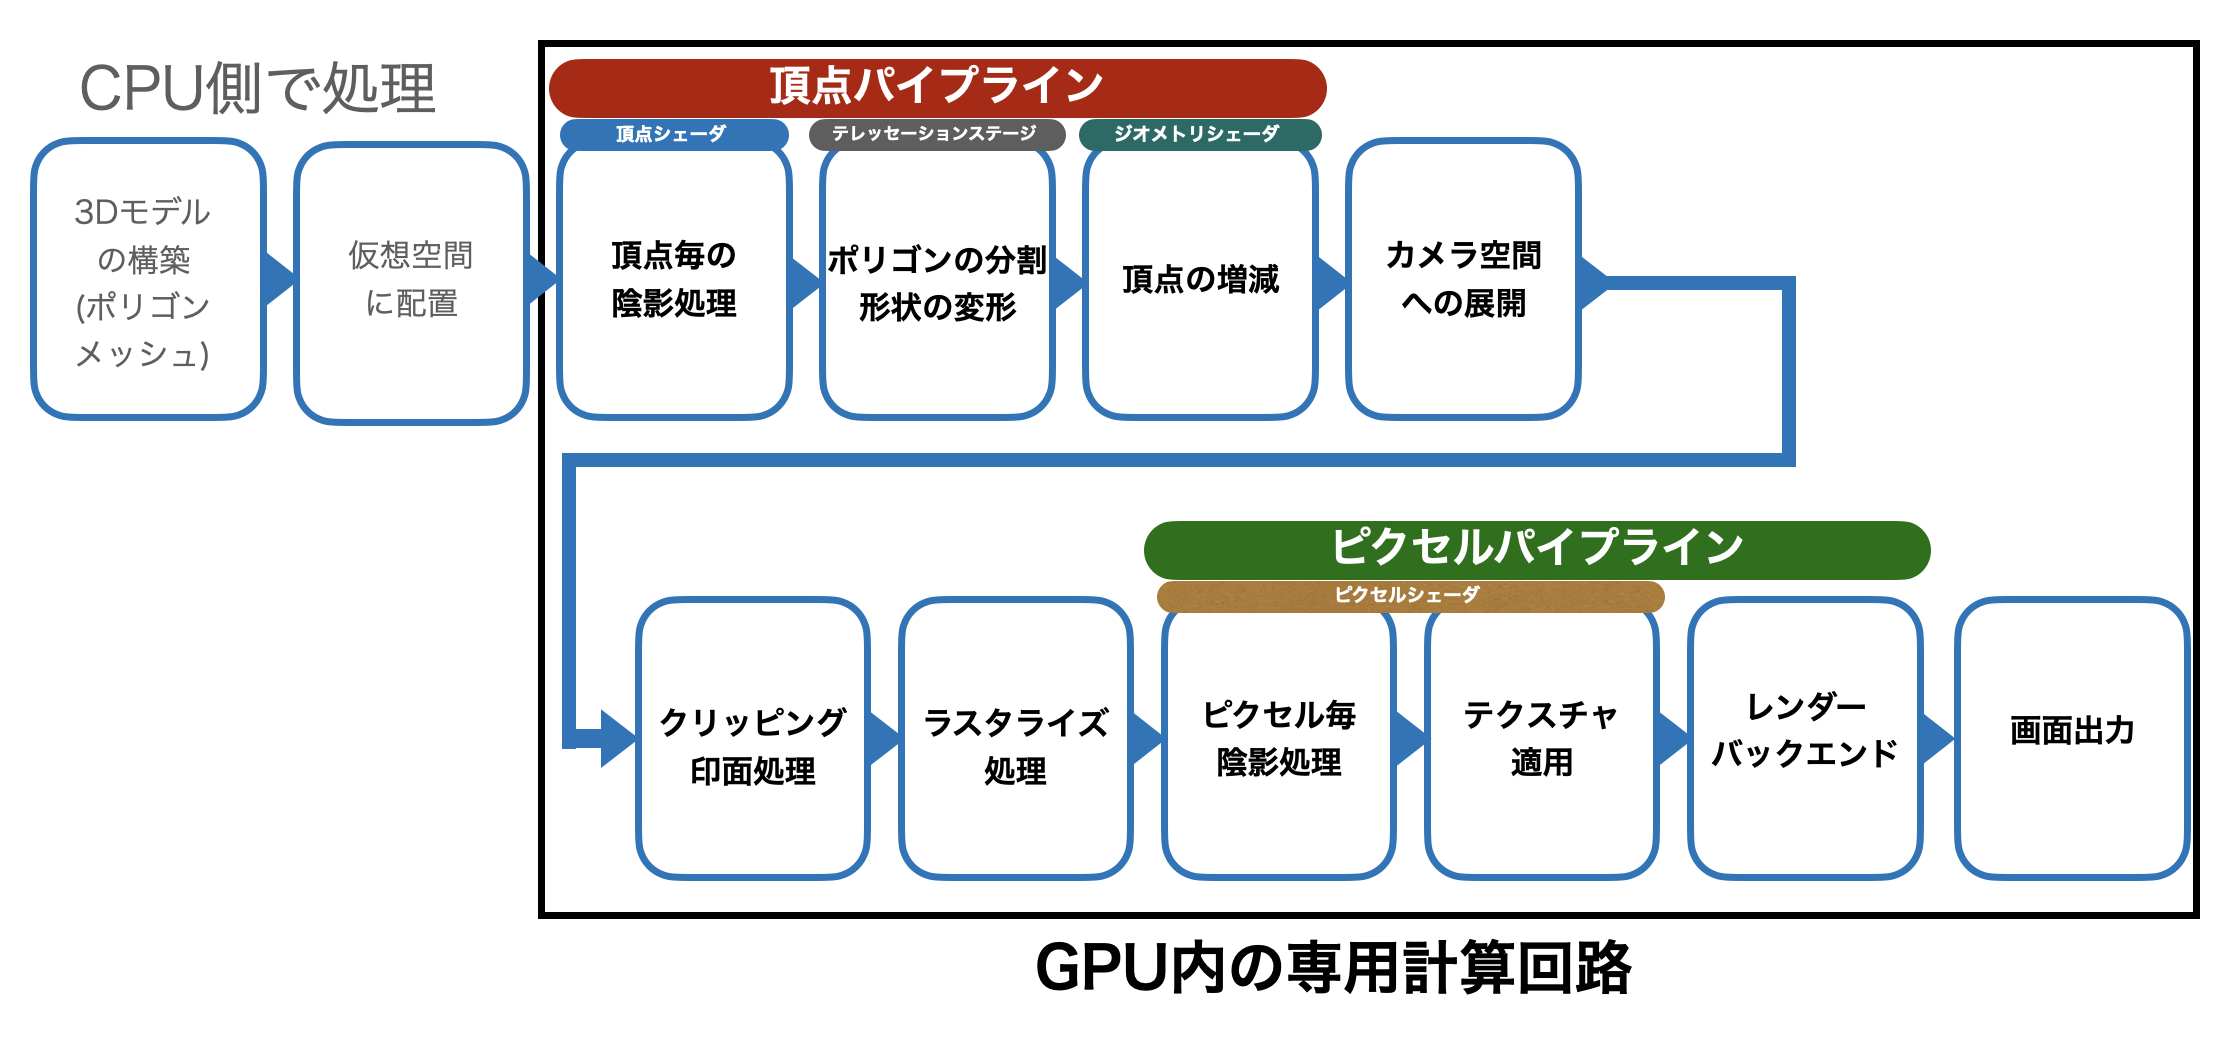 GPUにおけるOpenGLによるラスタライズパイプライン